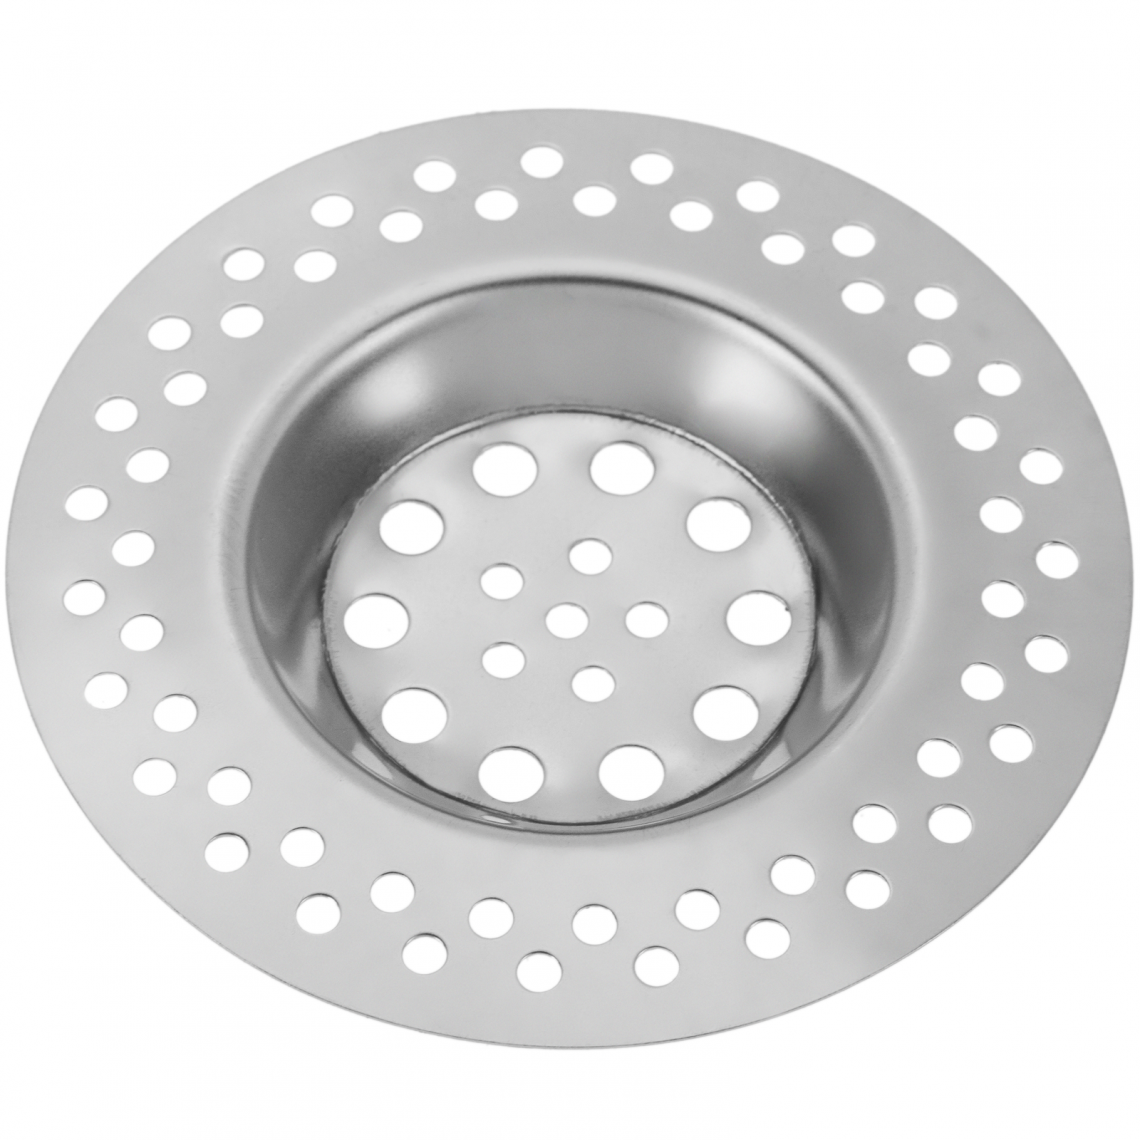 Primematik - Filtre de vidange anti-colmatage 70 x 40 mm - Bonde de lavabo